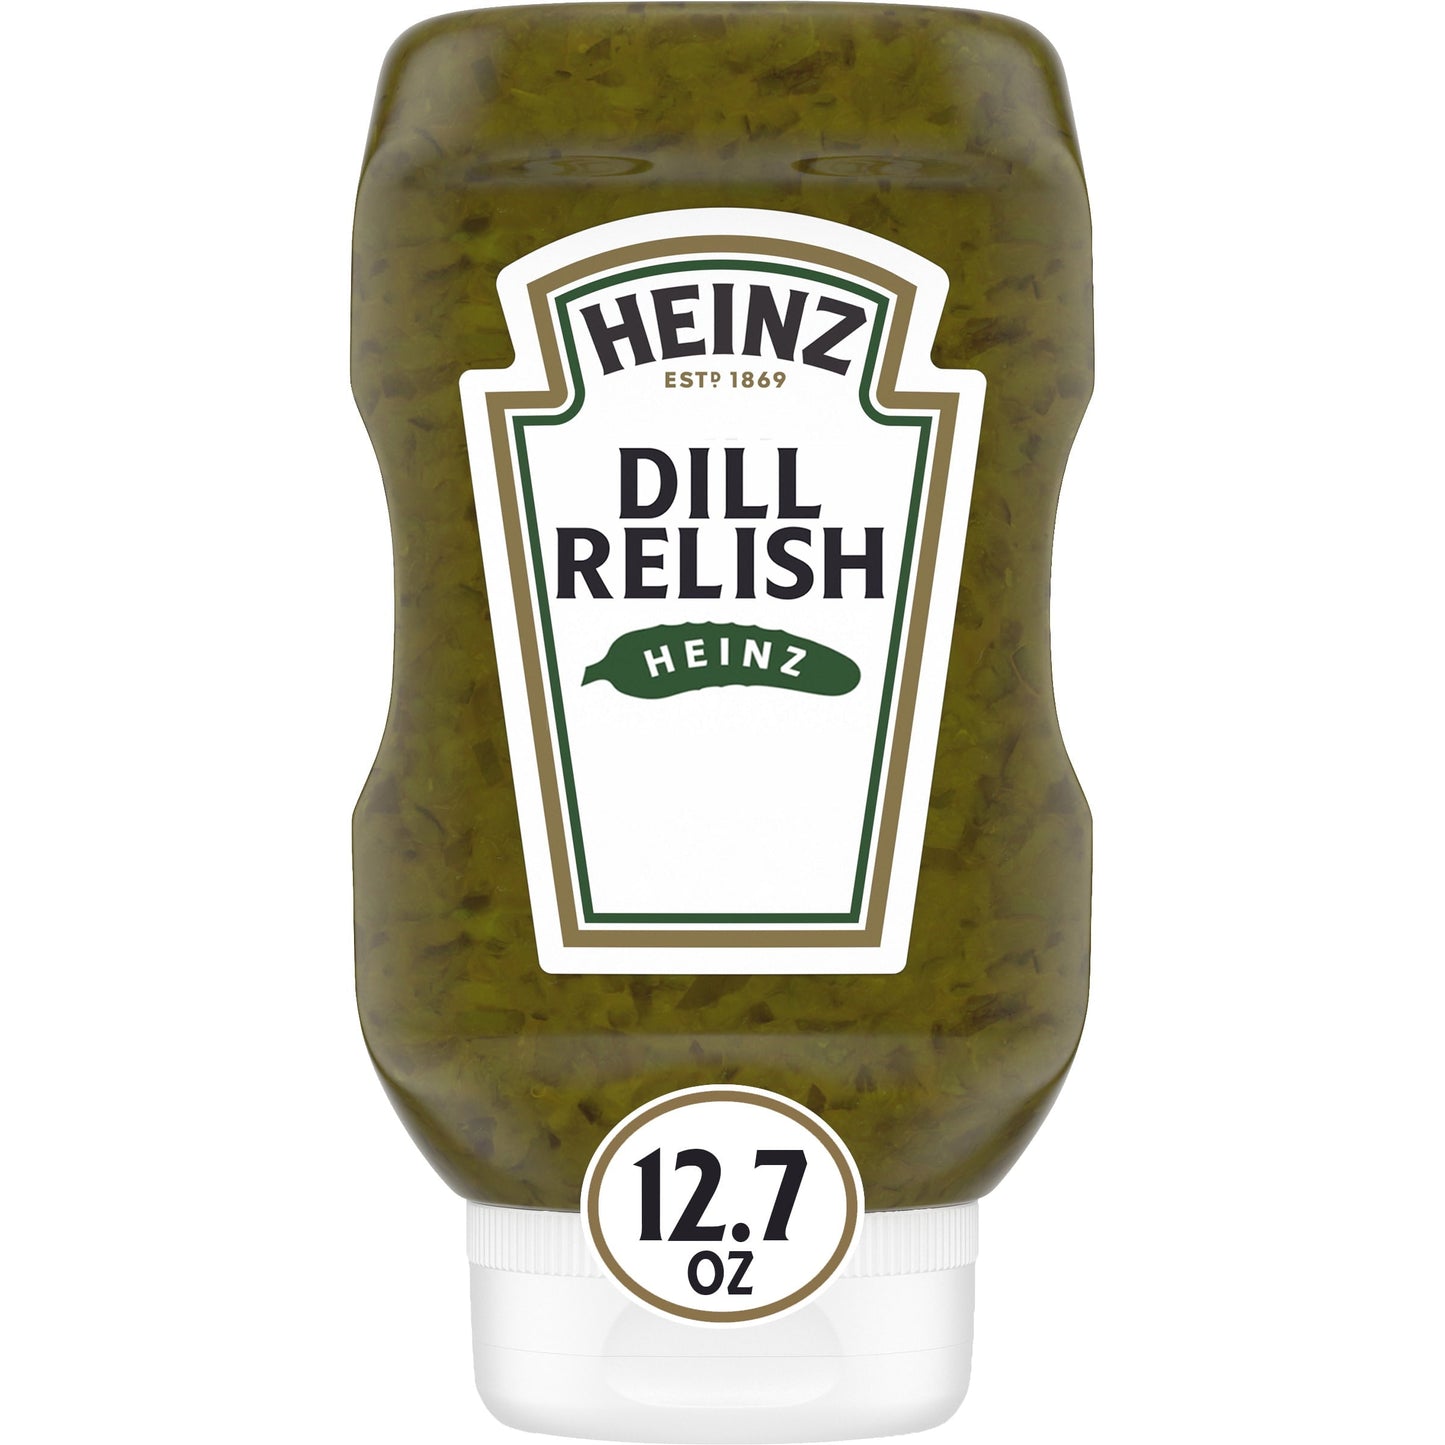 Heinz Dill Relish, 12.7 fl oz Bottle